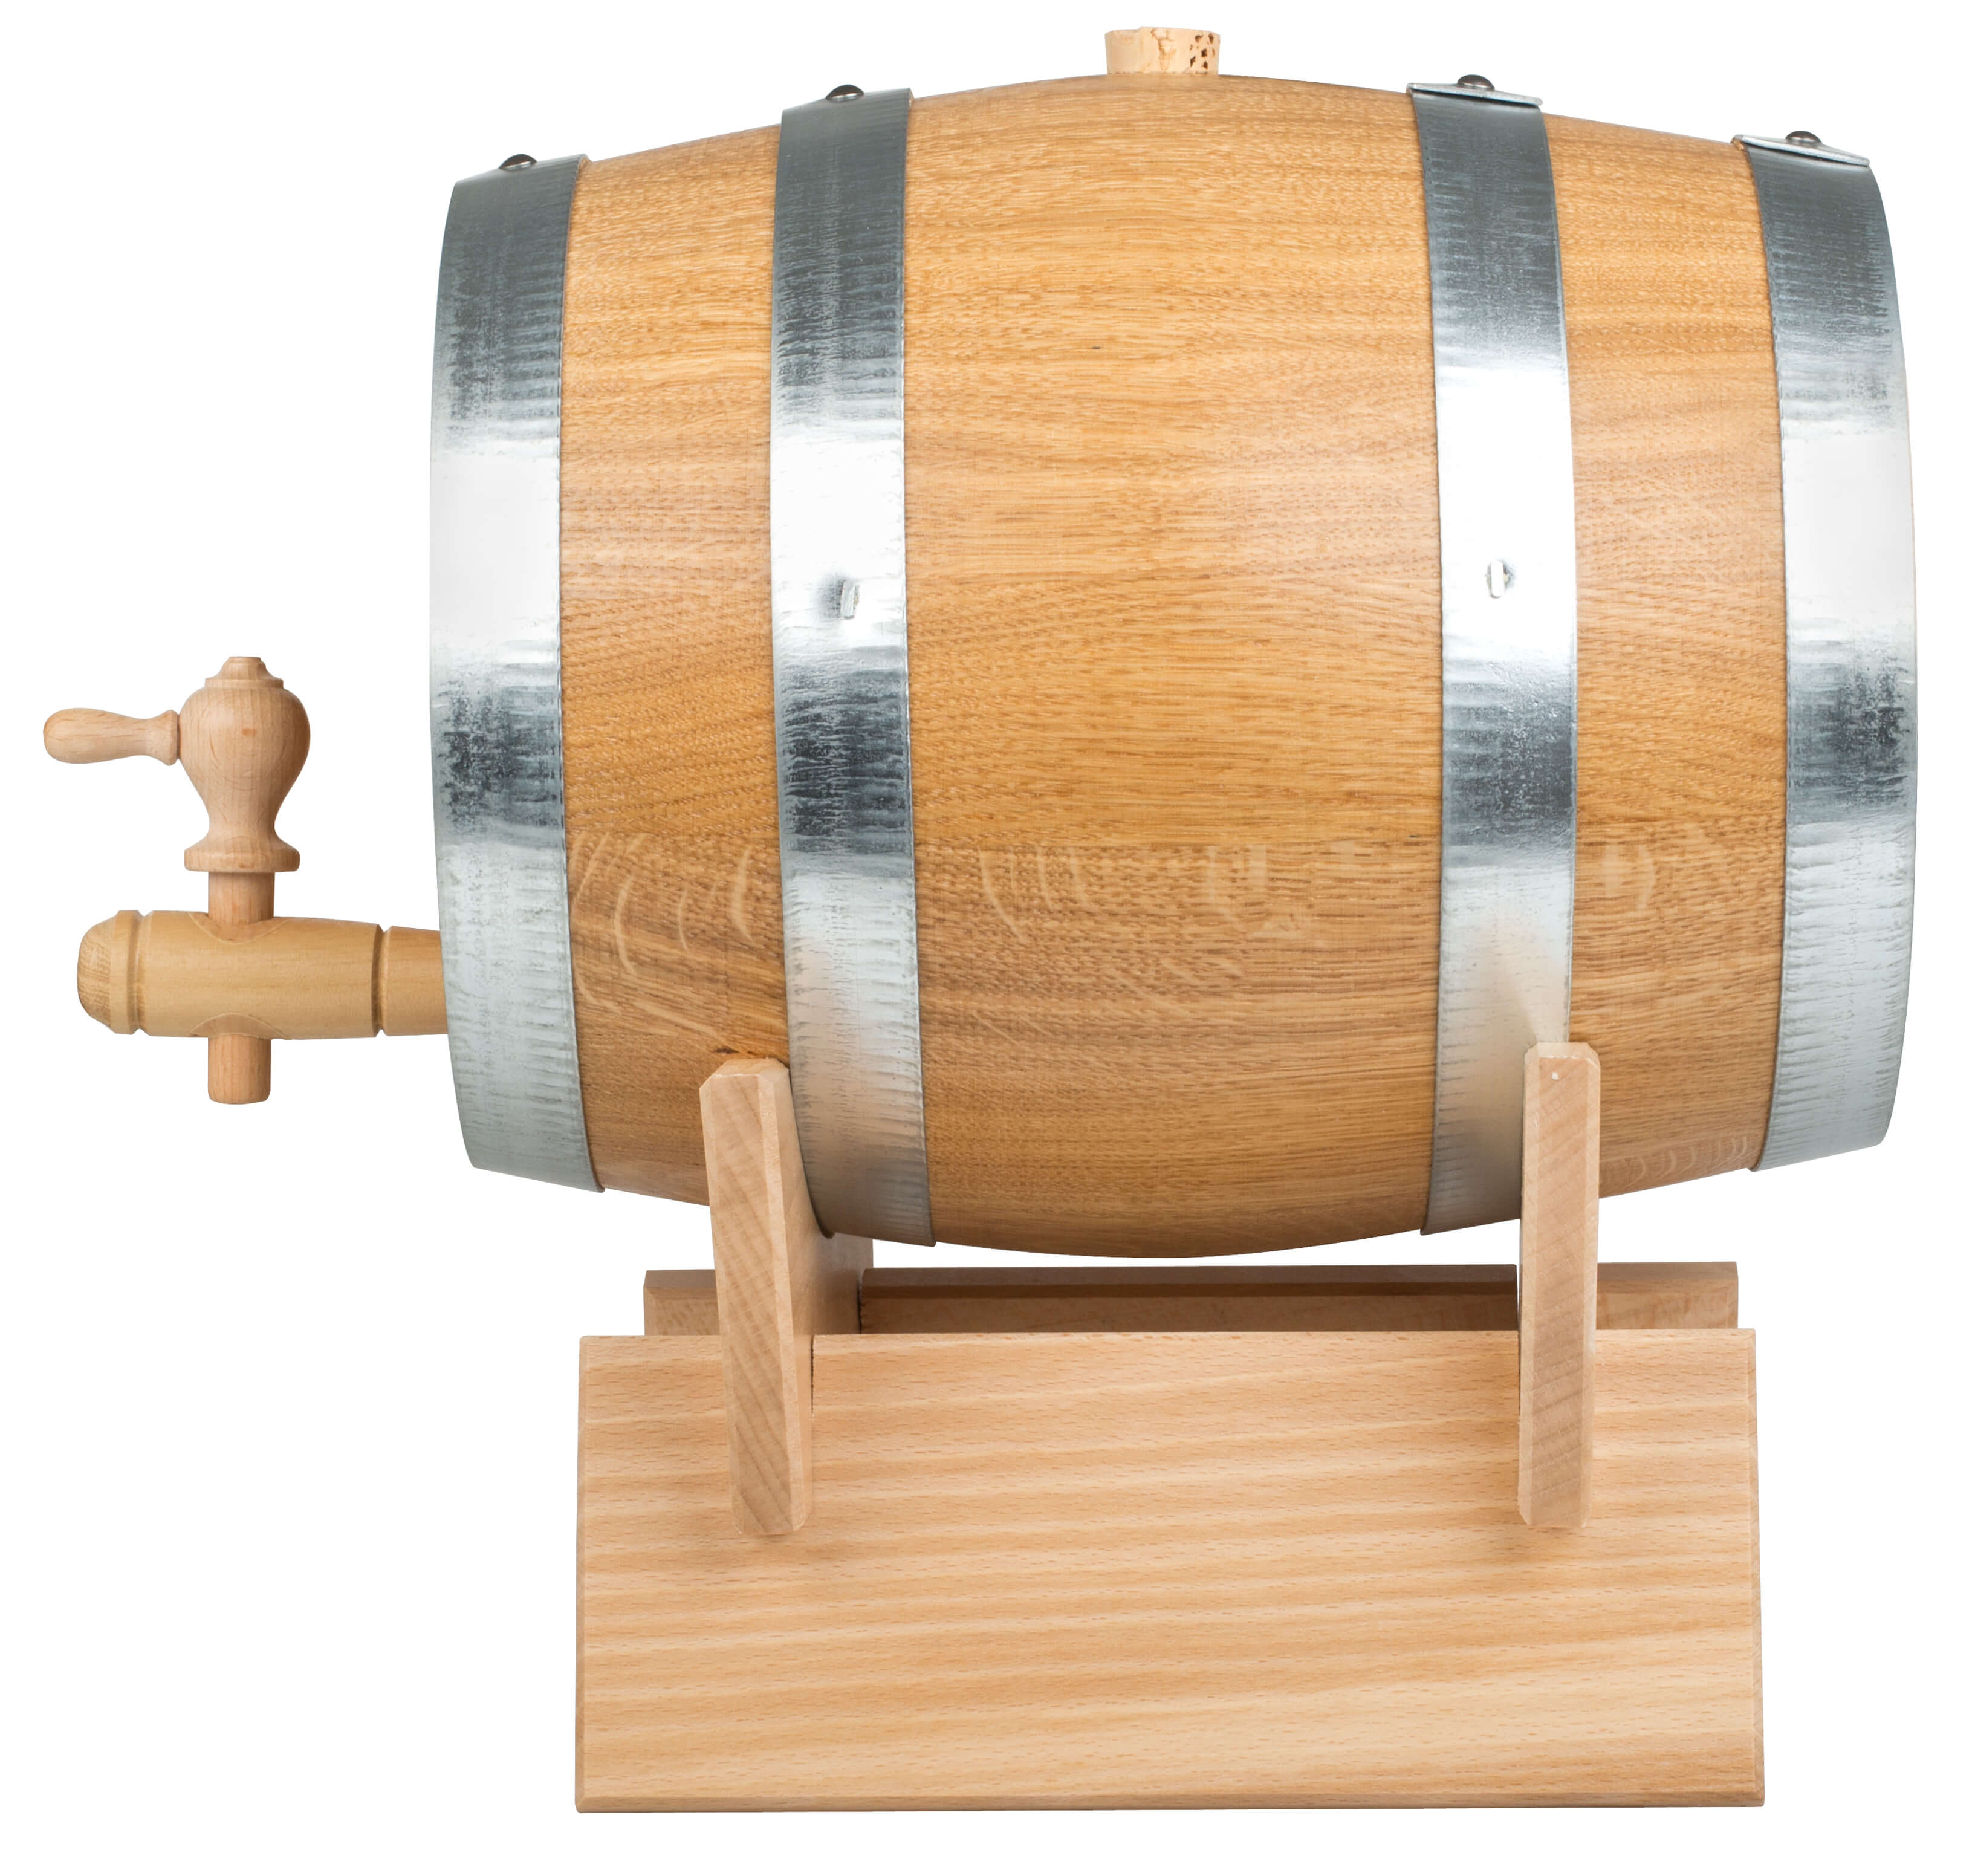 Destillate oak barrel, with galvanised collars, 5l